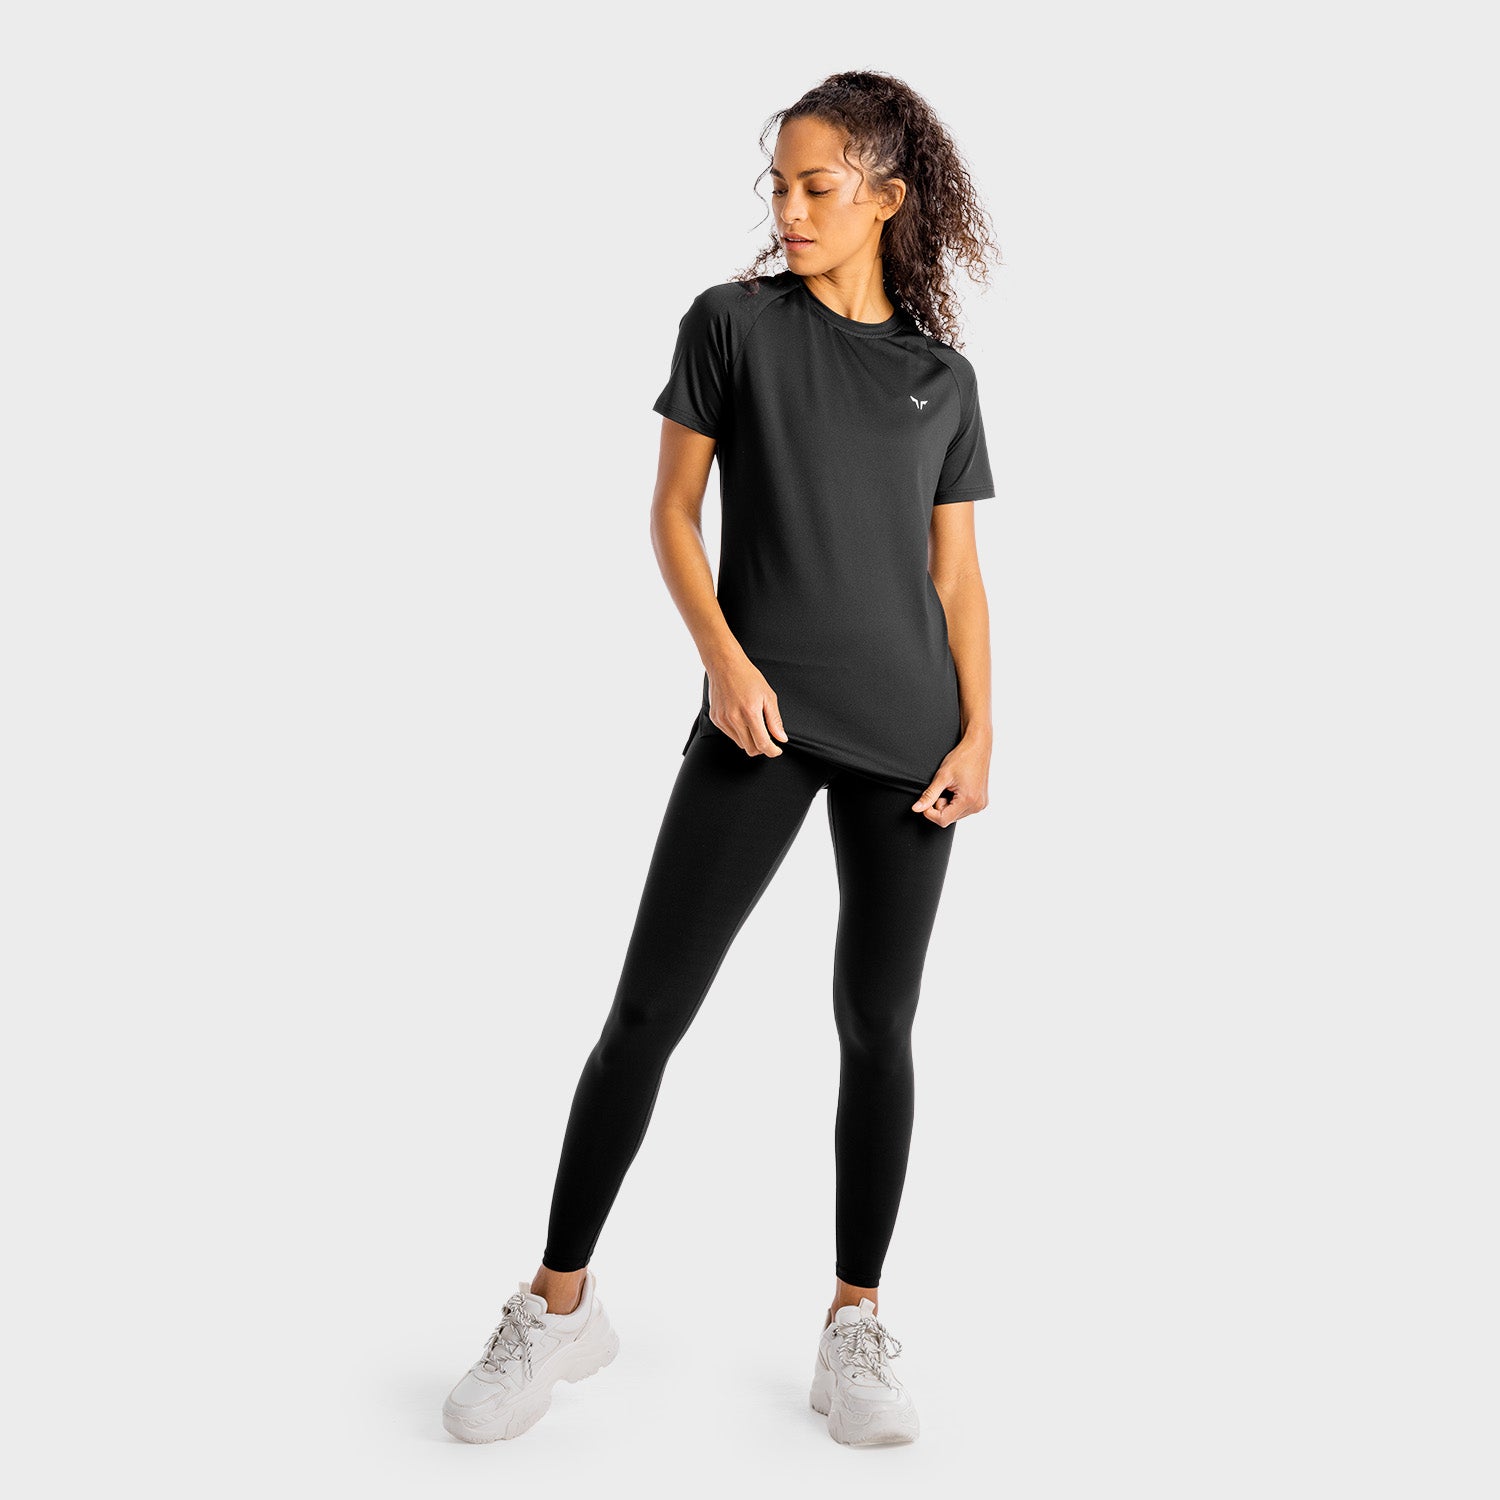 AE | Core Mesh Tee - Black | Workout Shirts Women | SQUATWOLF